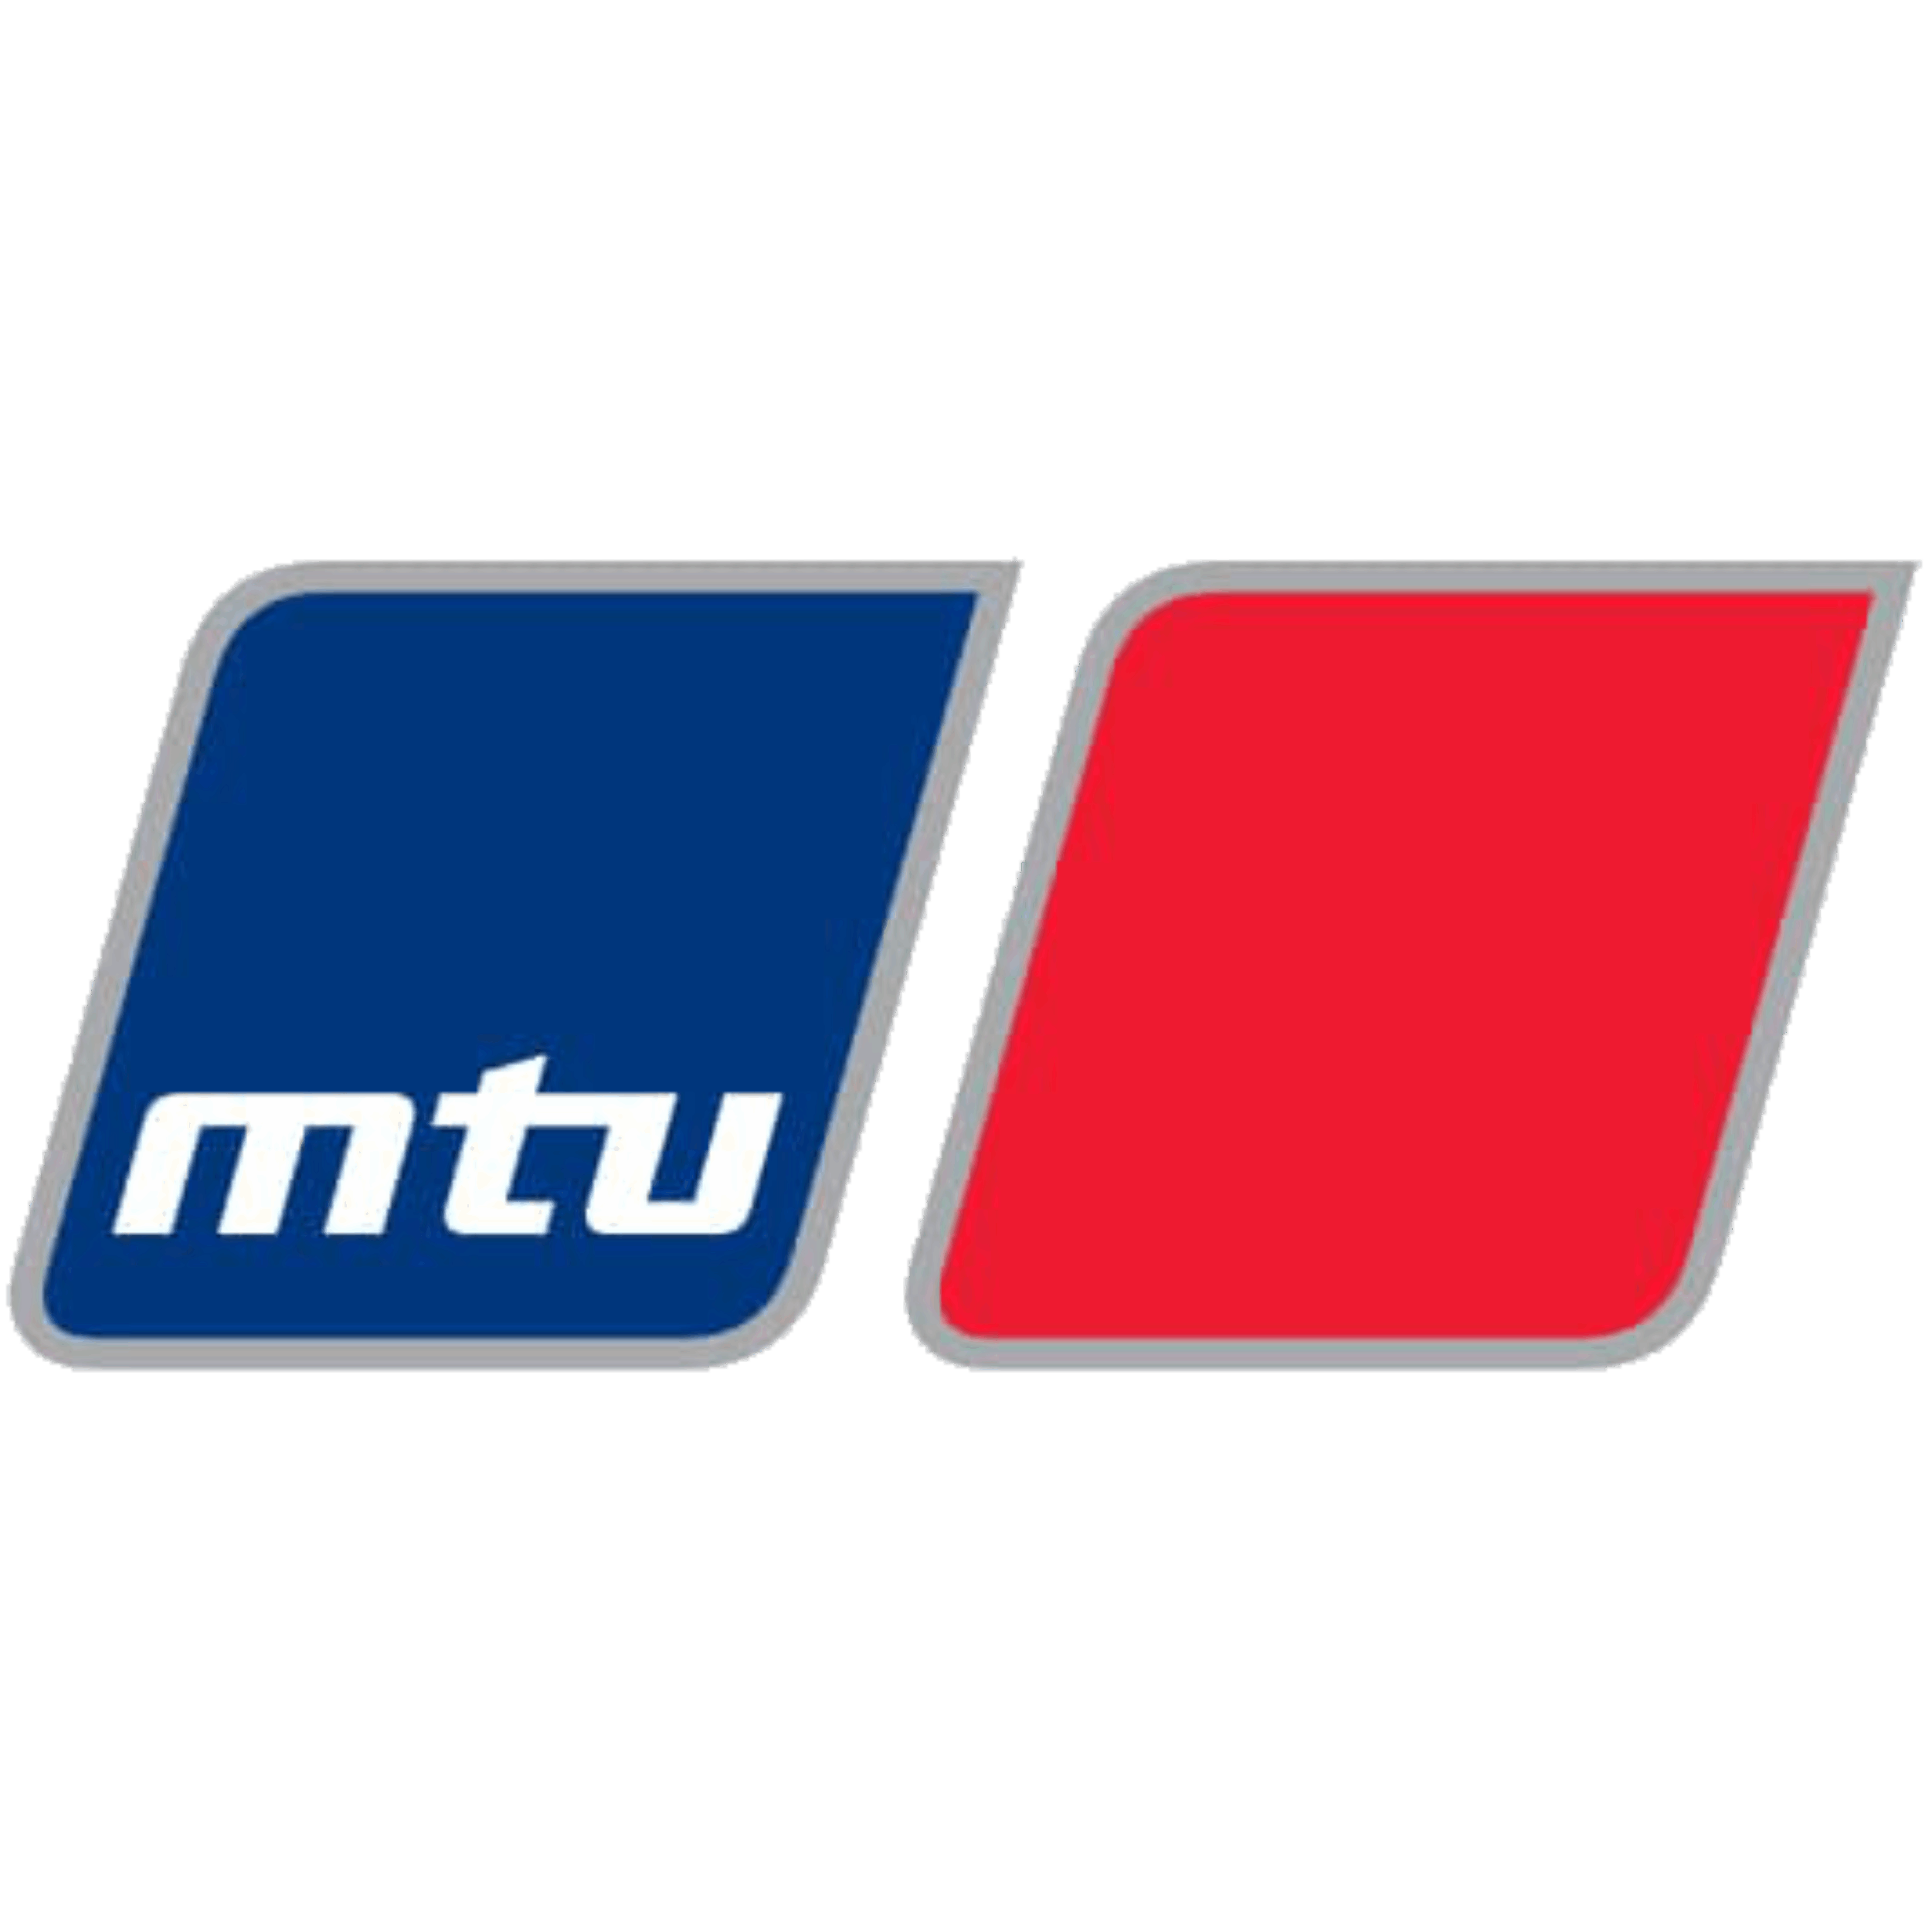 MTU Marine Engines logo